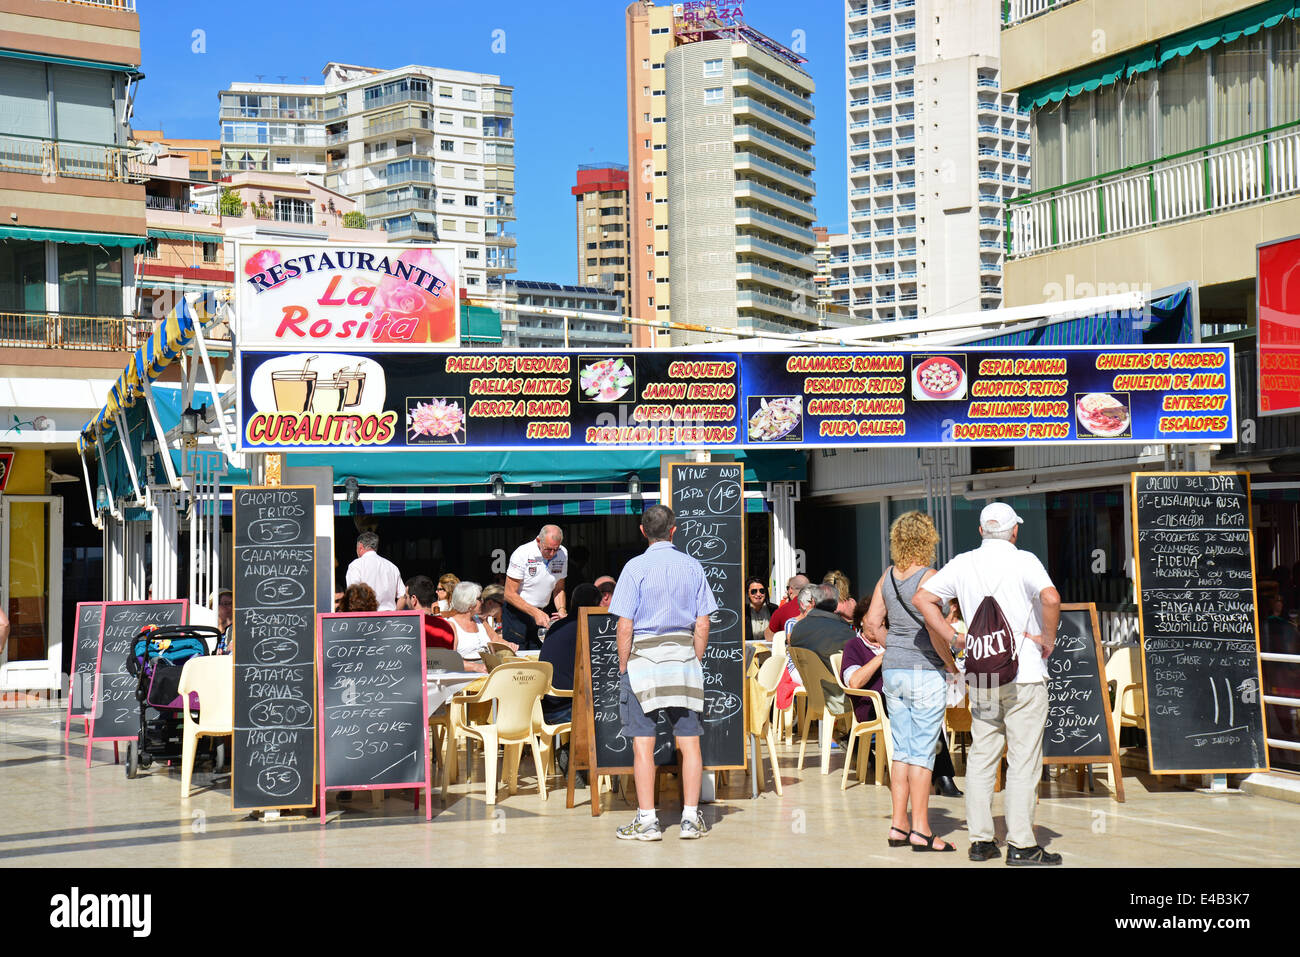 La Rosita restaurant on seafront promenade, Playa de Levante, Benidorm, Costa Blanca, Alicante Province, Kingdom of Spain Stock Photo